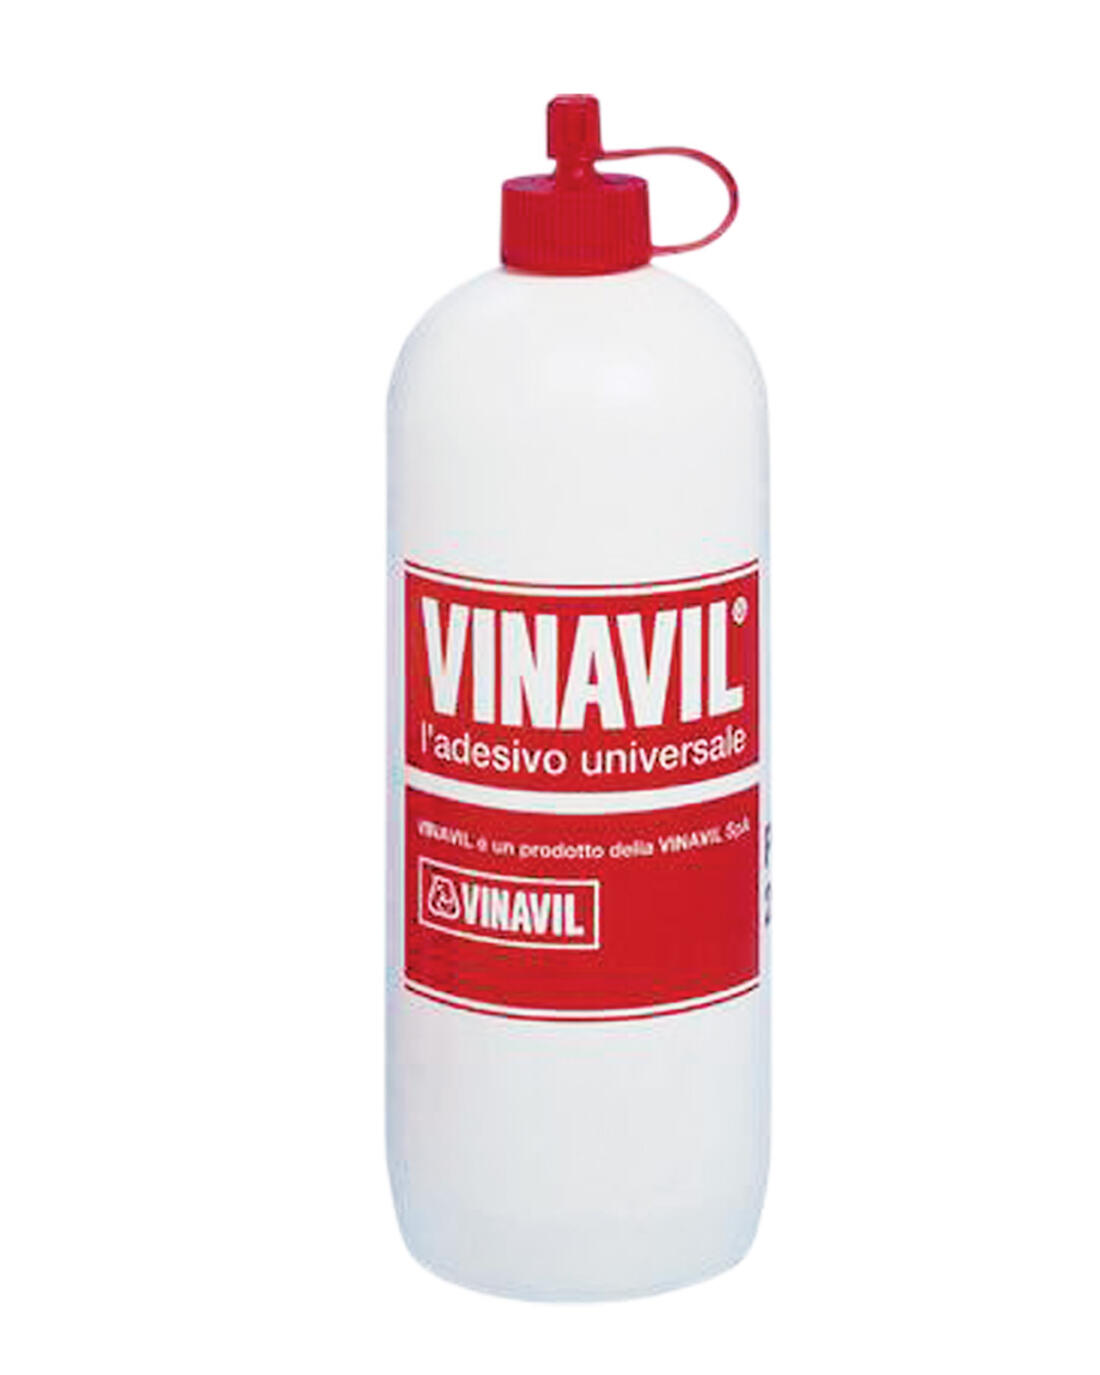 VINAVIL UNIVERSALE 250 g. - Chimico